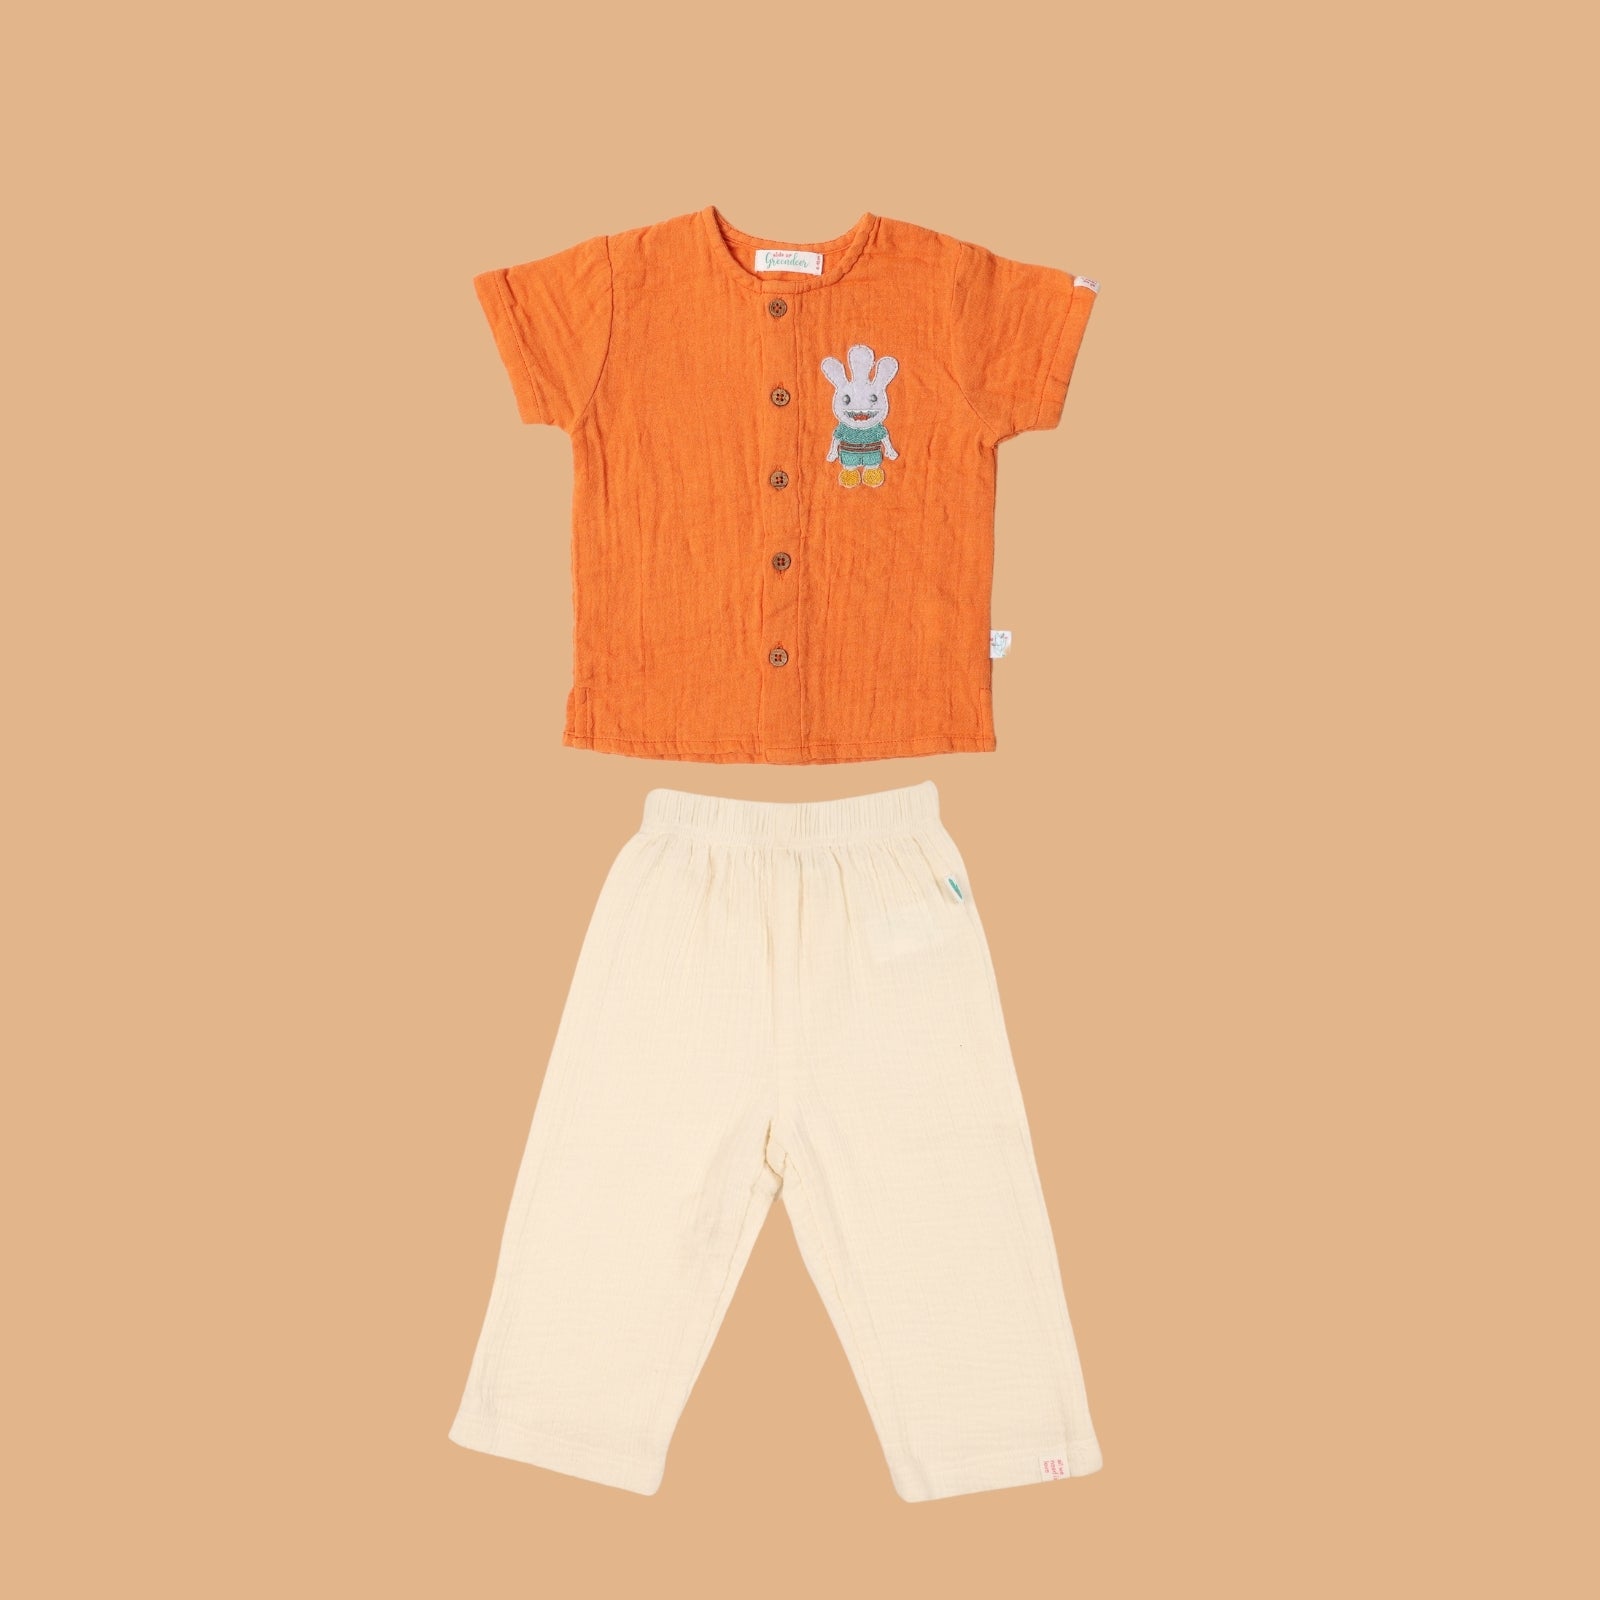 Kids of Greendeer Resort 3/4th Placket Kurta Shirt with Resort Pant Orange & White